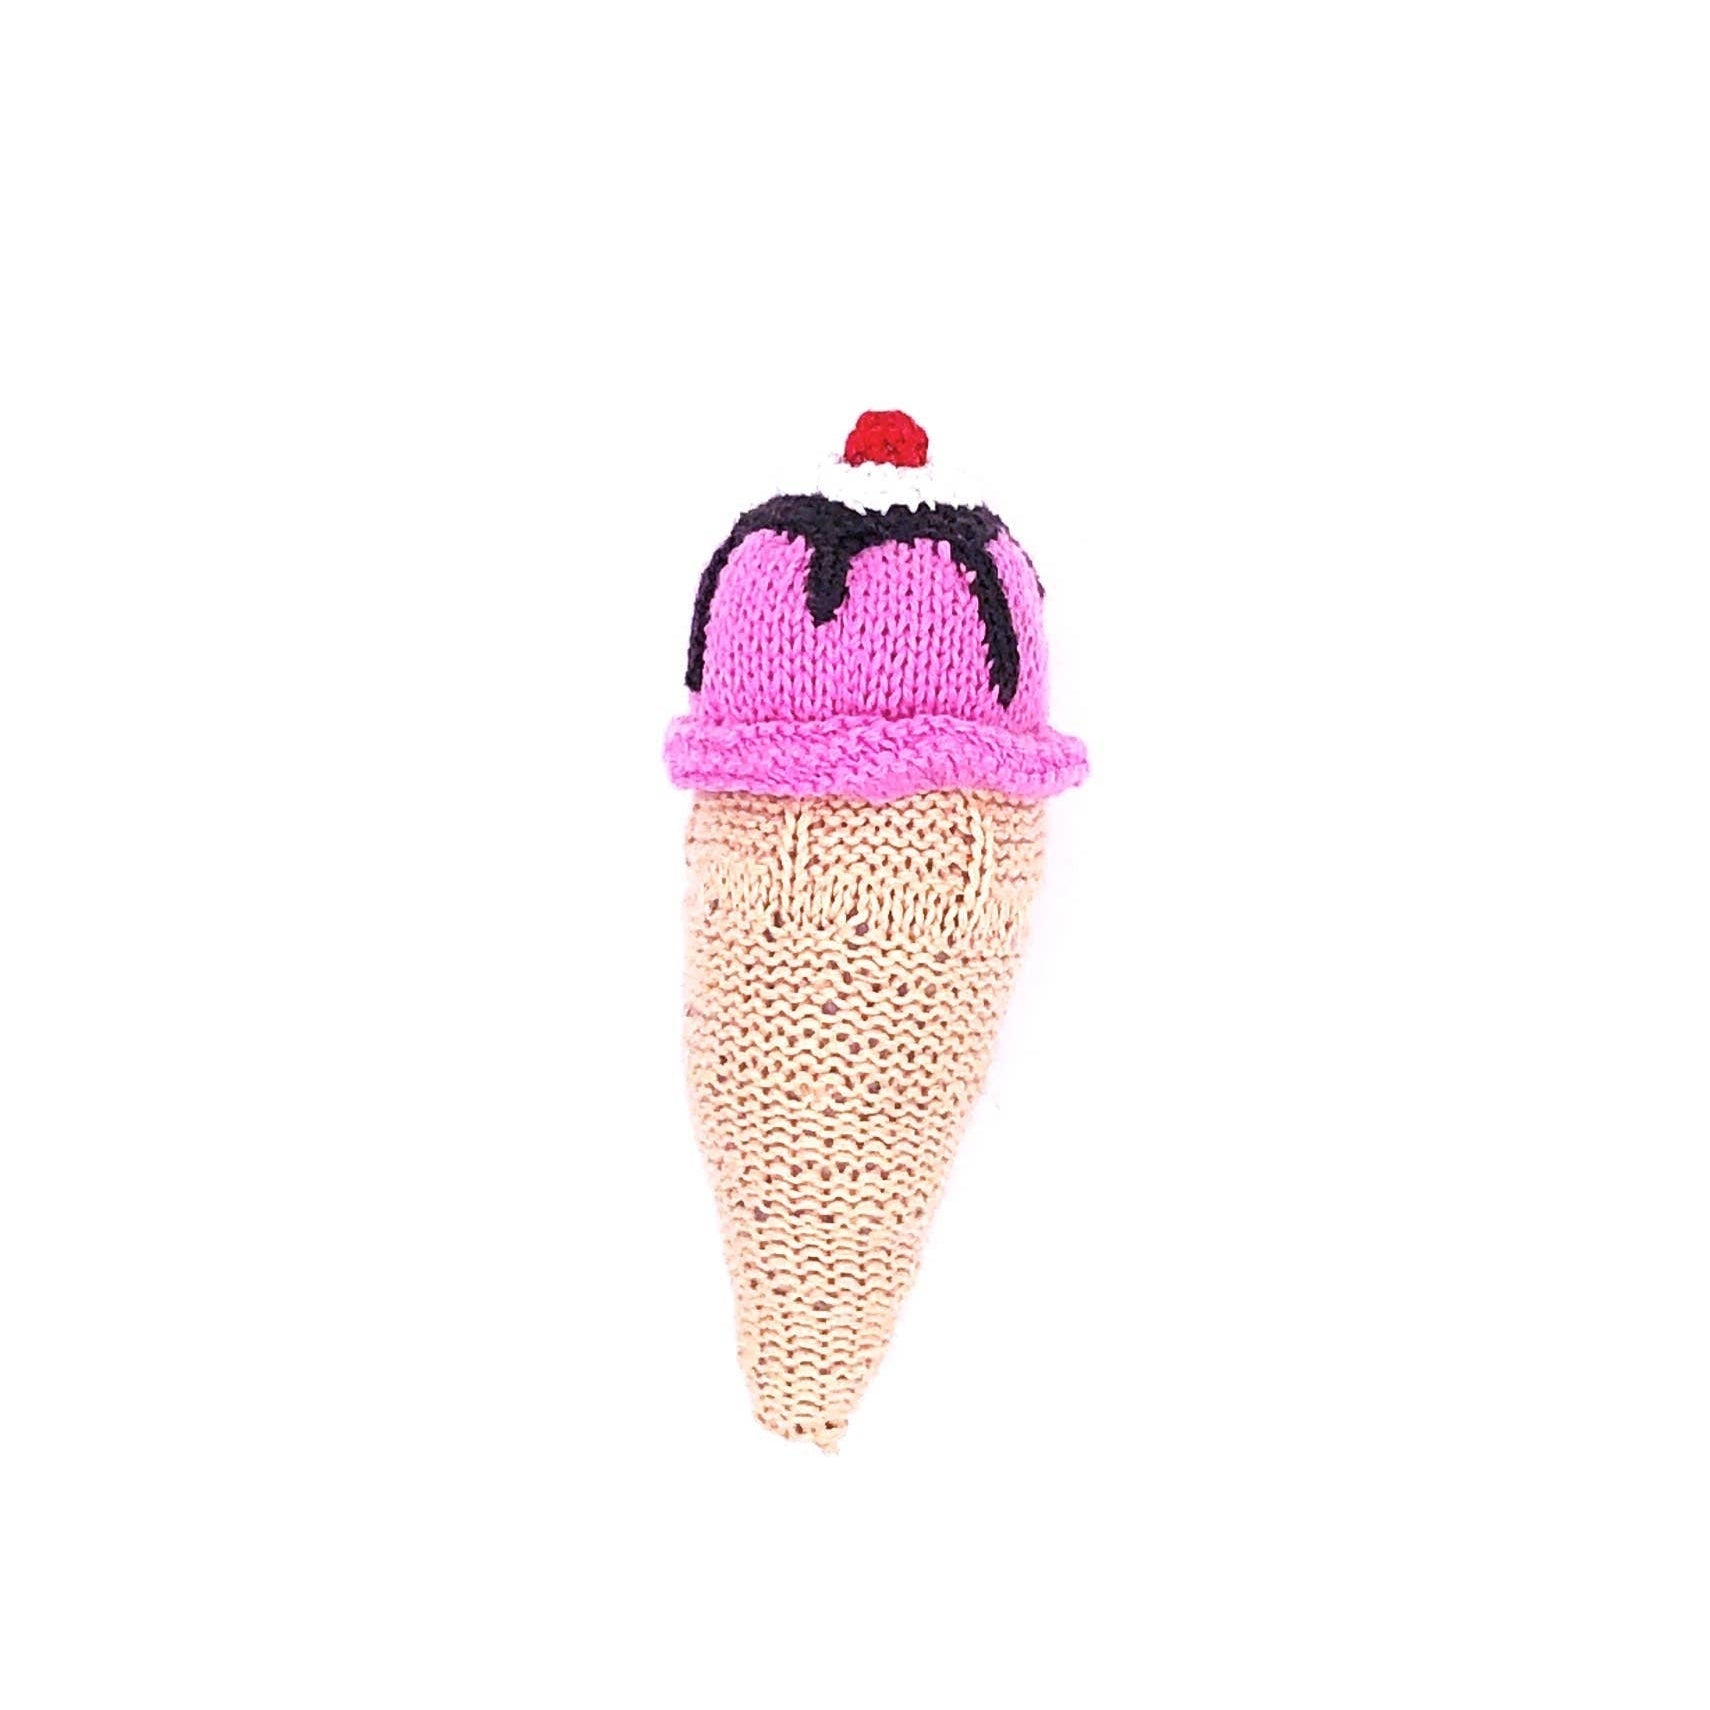 Ice Cream Cone Rattle - Strawberry